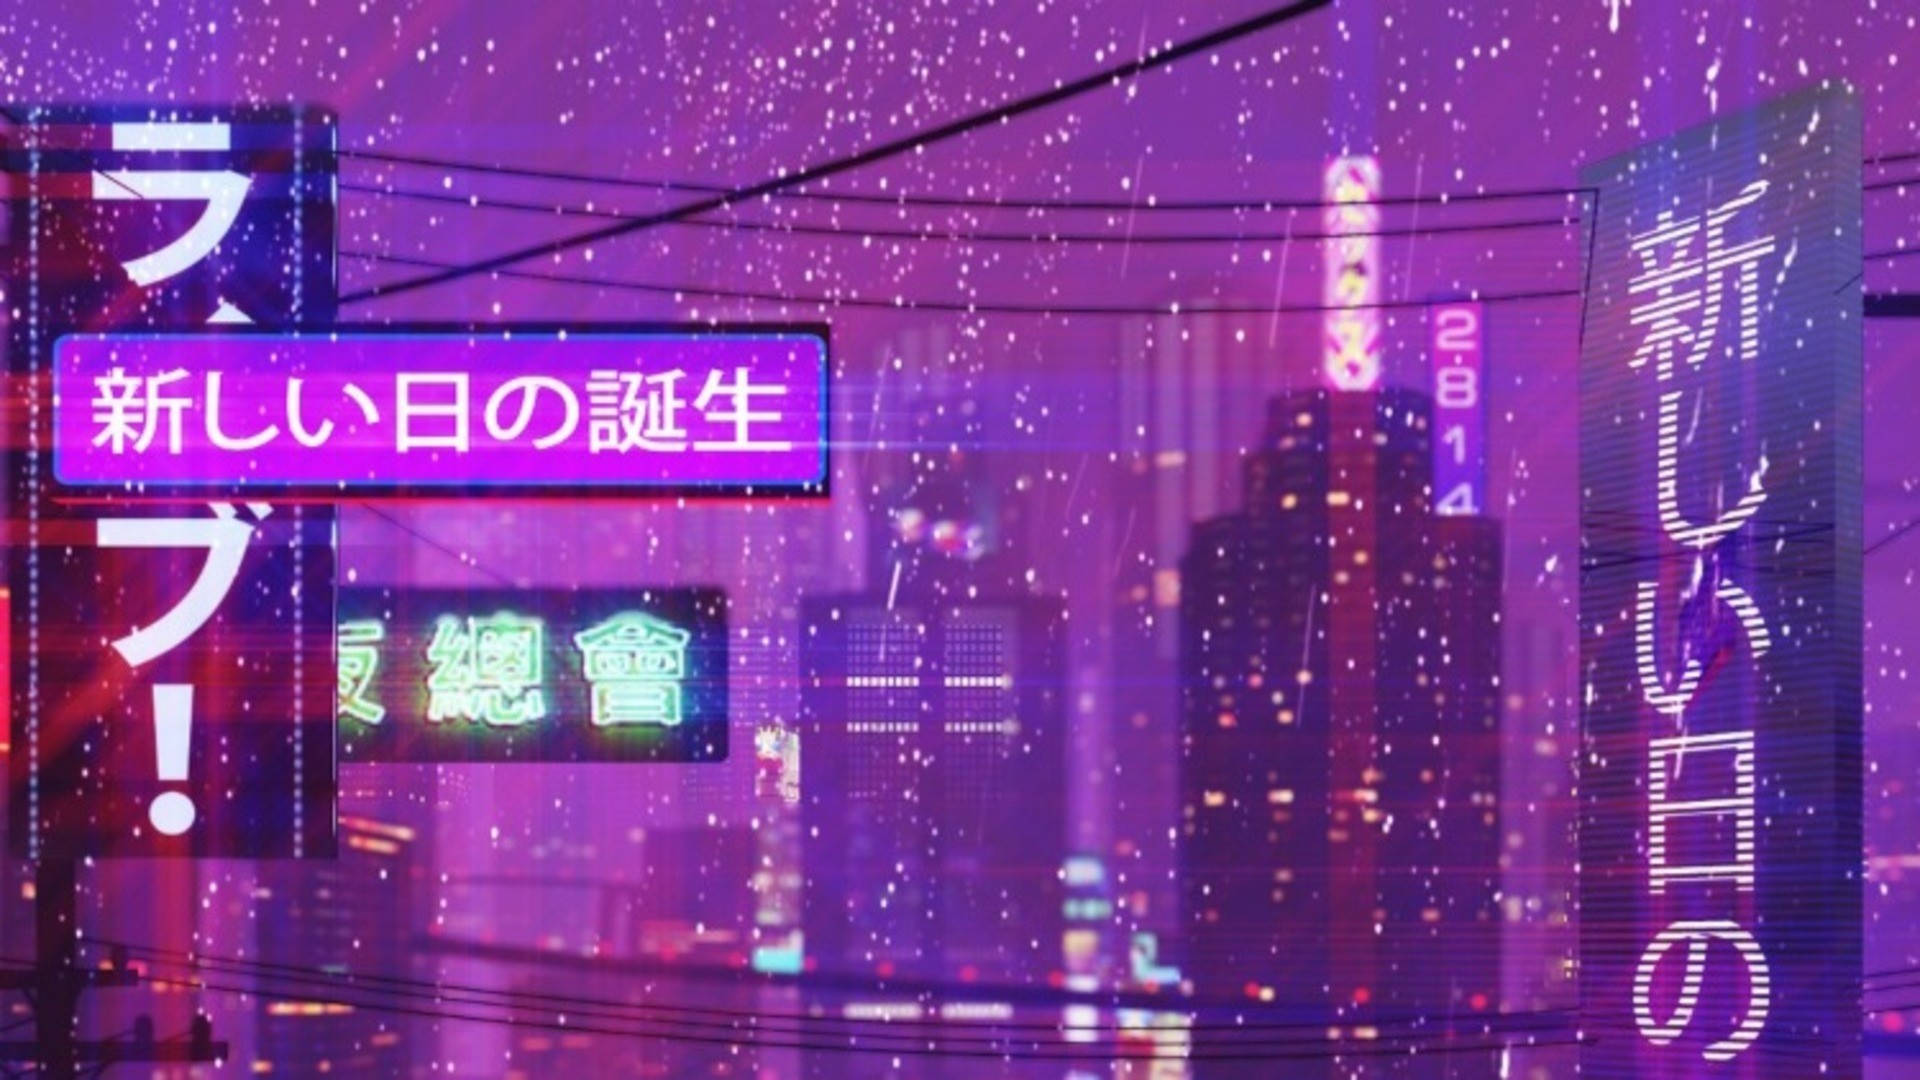 Download A Surreal Cityscape of Purple